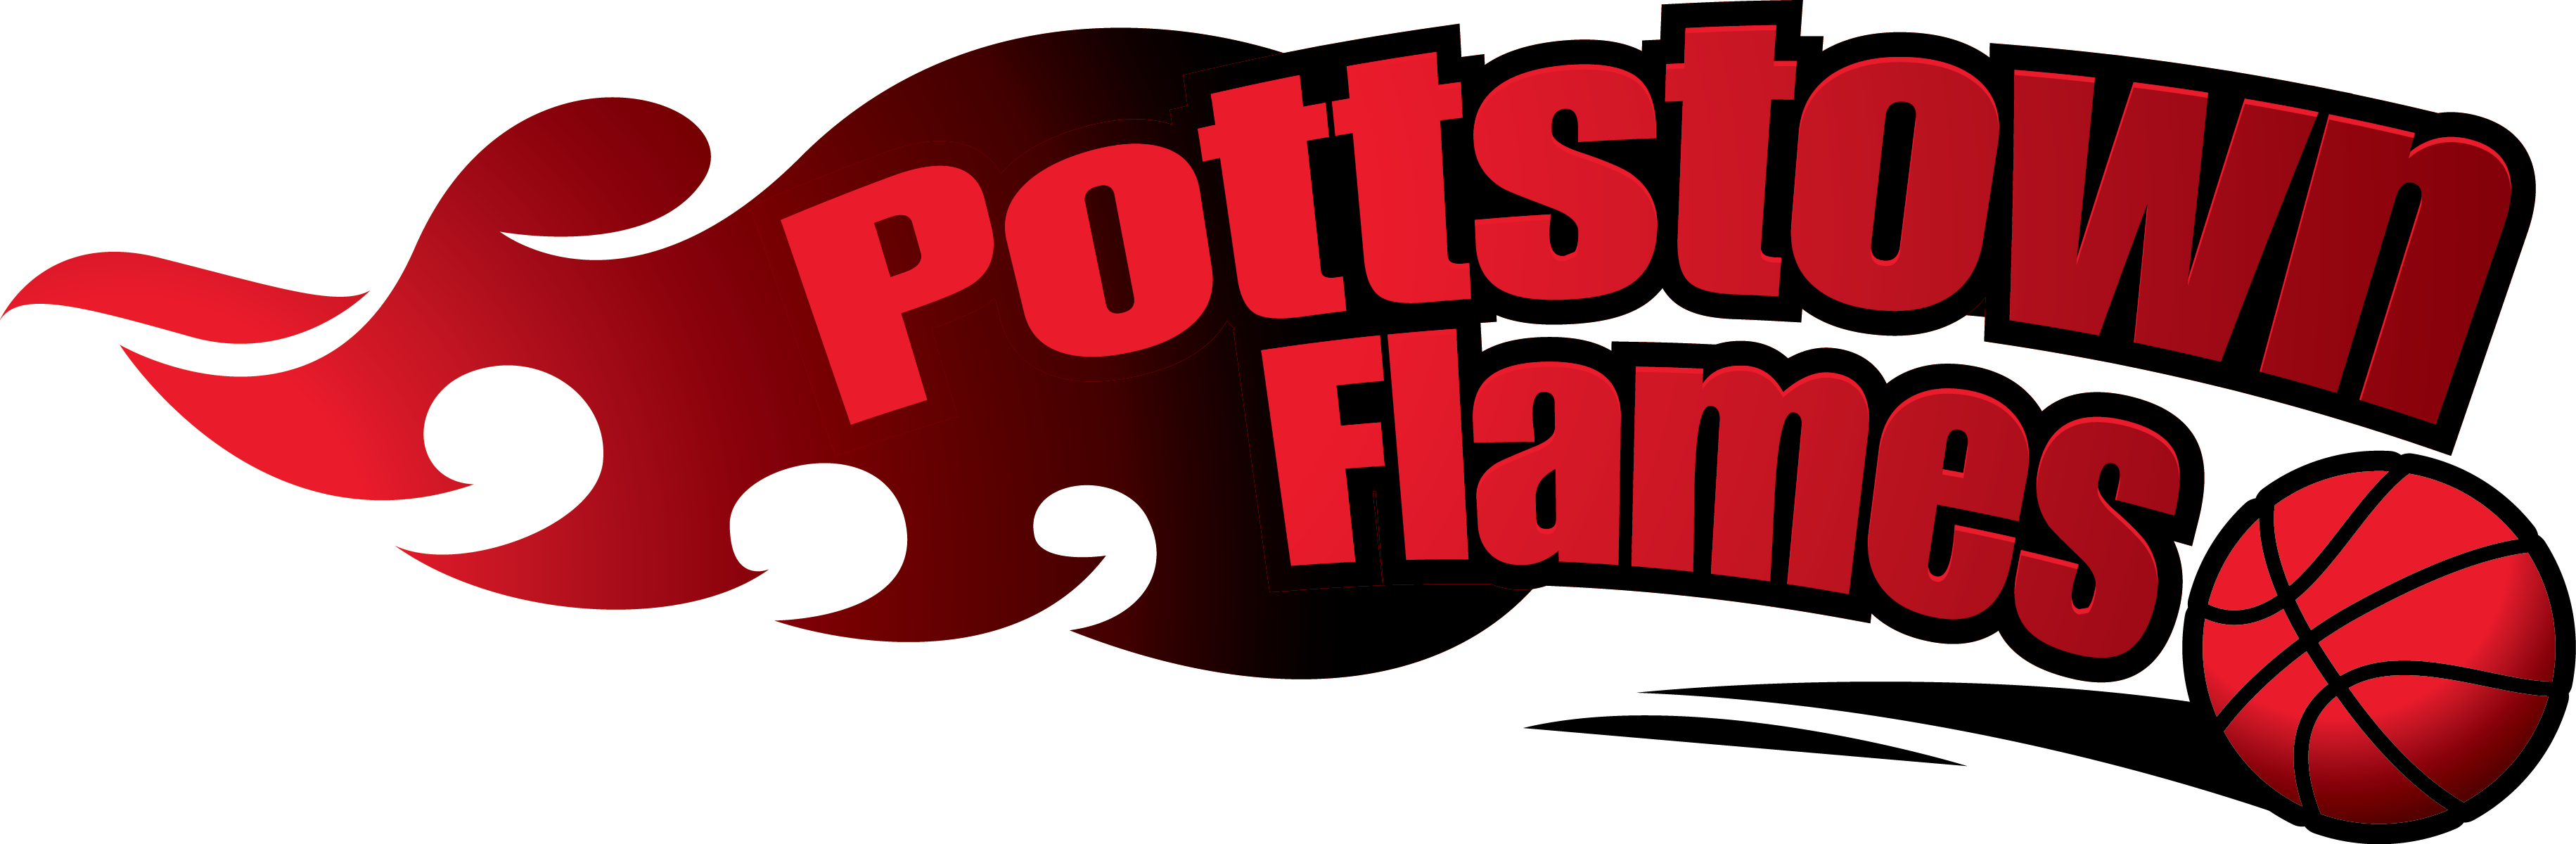 pottstown_Logo.png